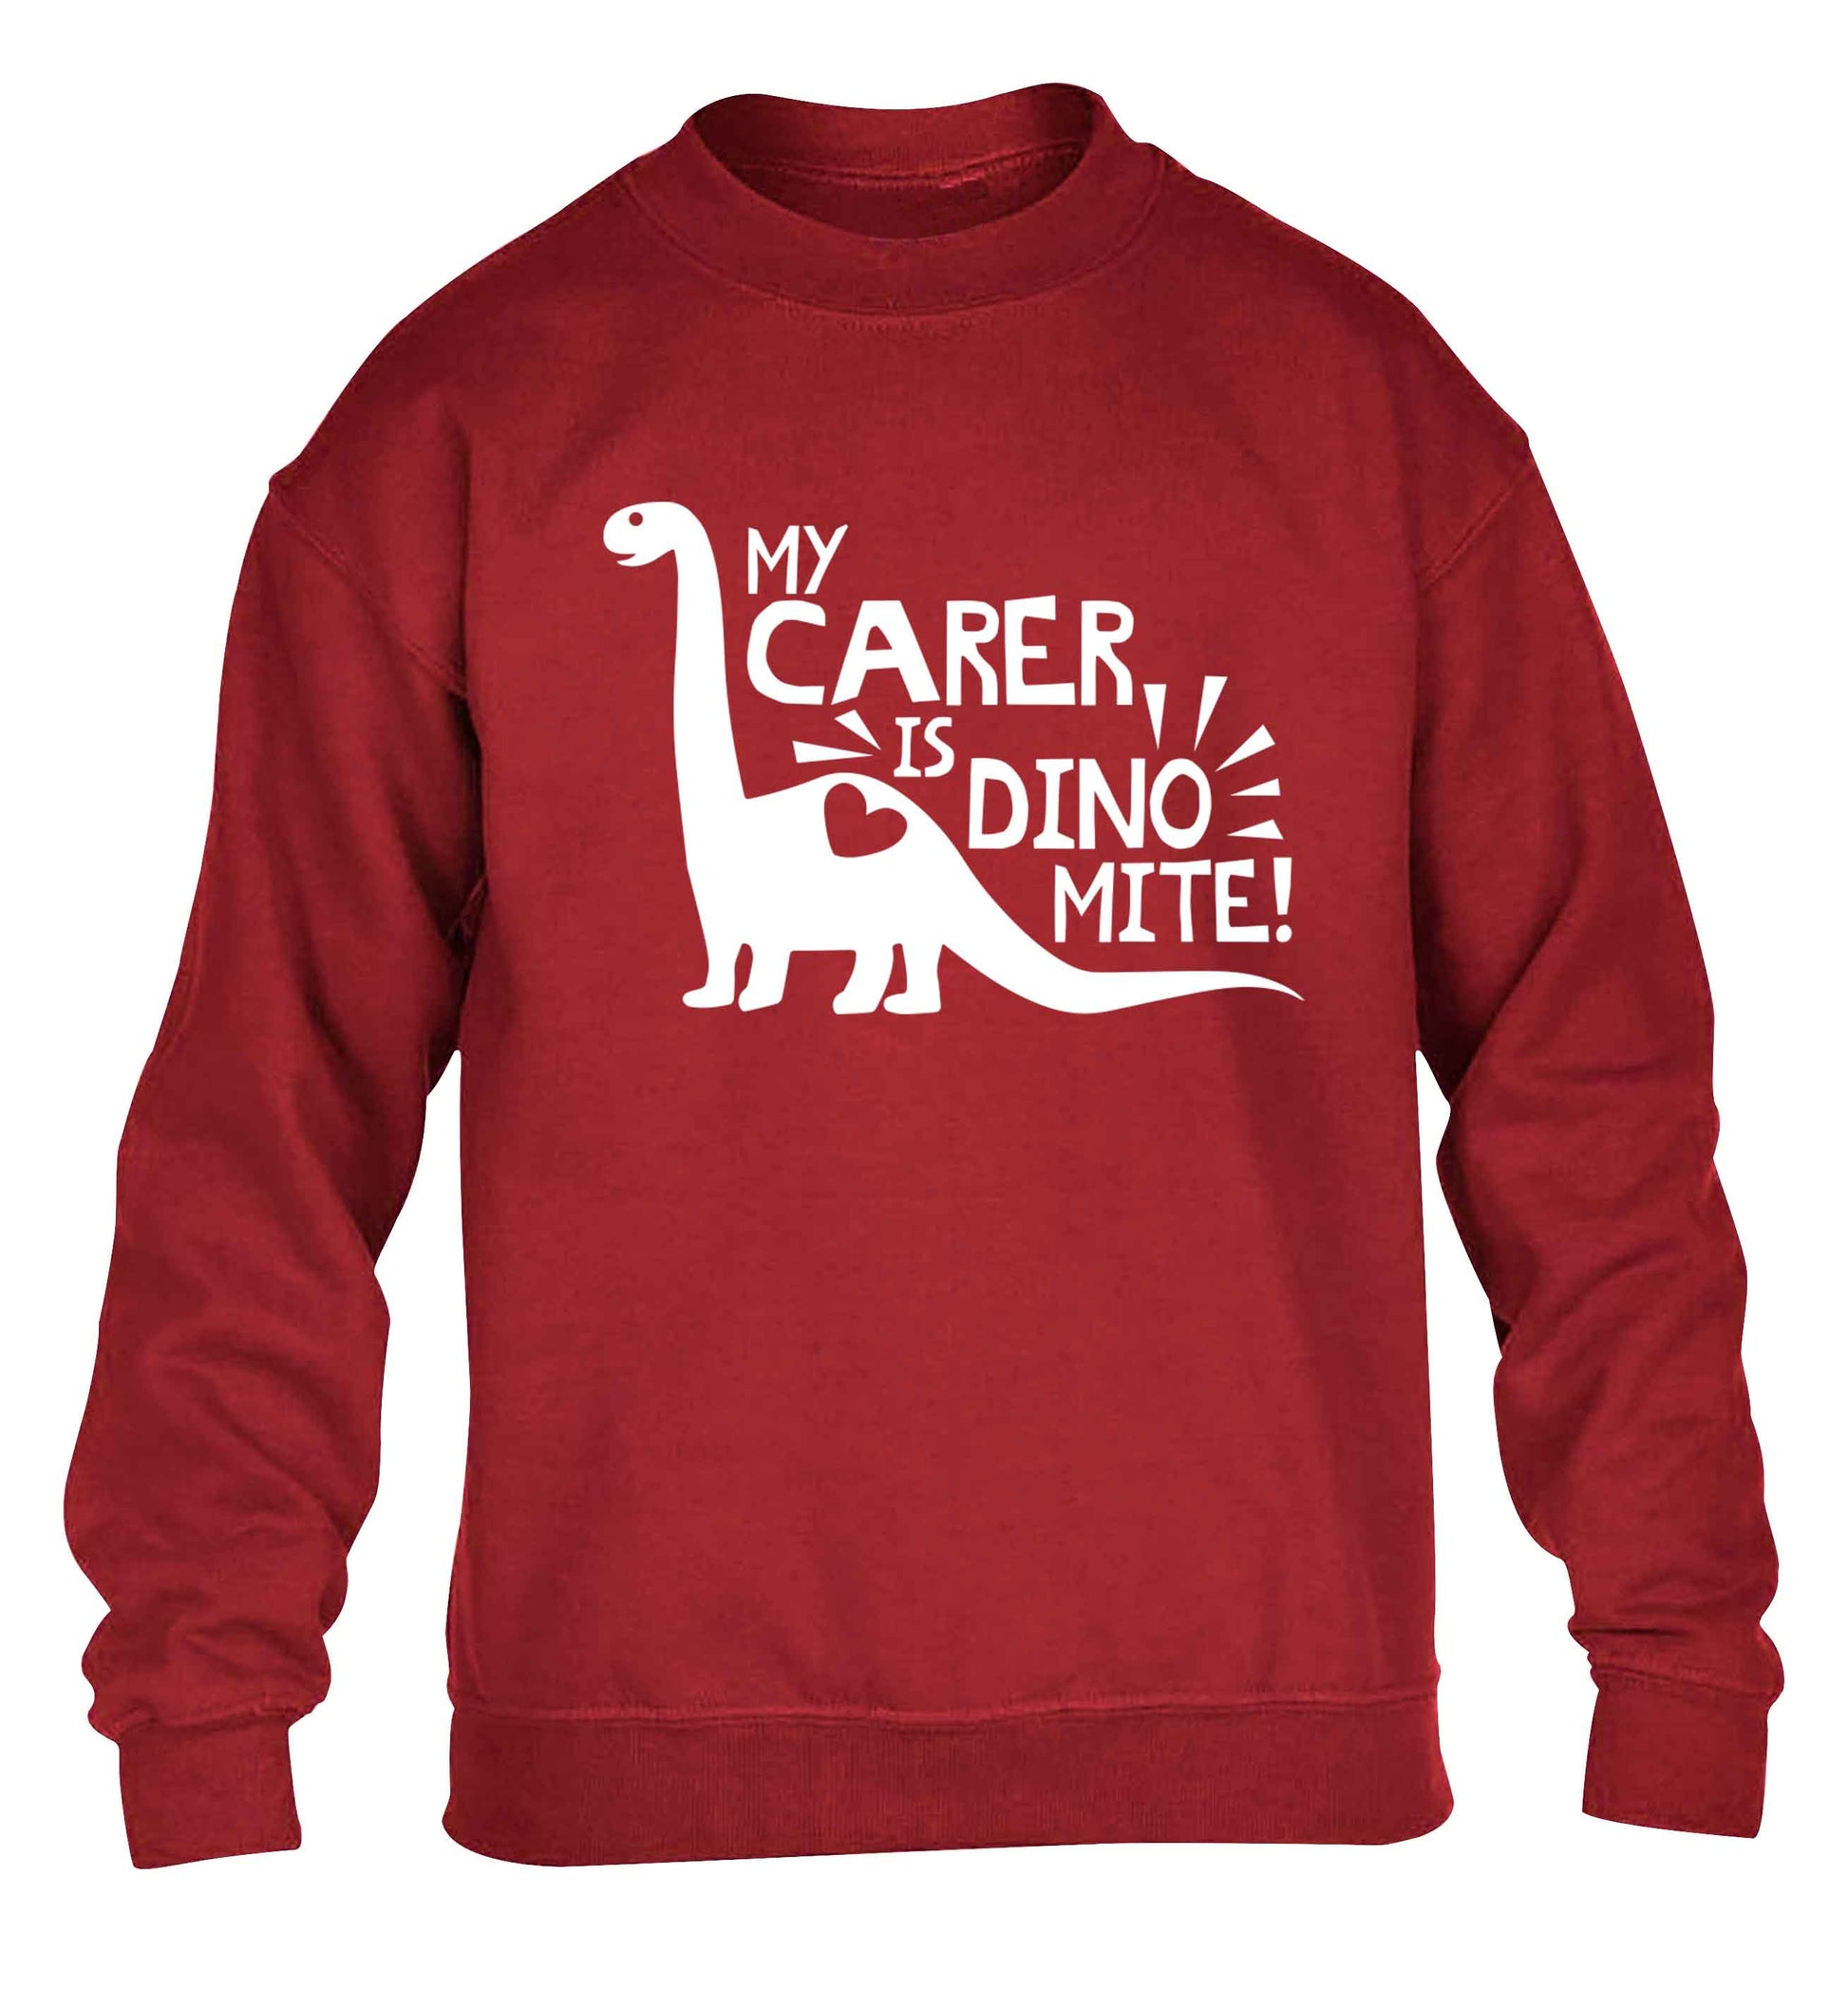 My carer is dinomite! children's grey sweater 12-13 Years